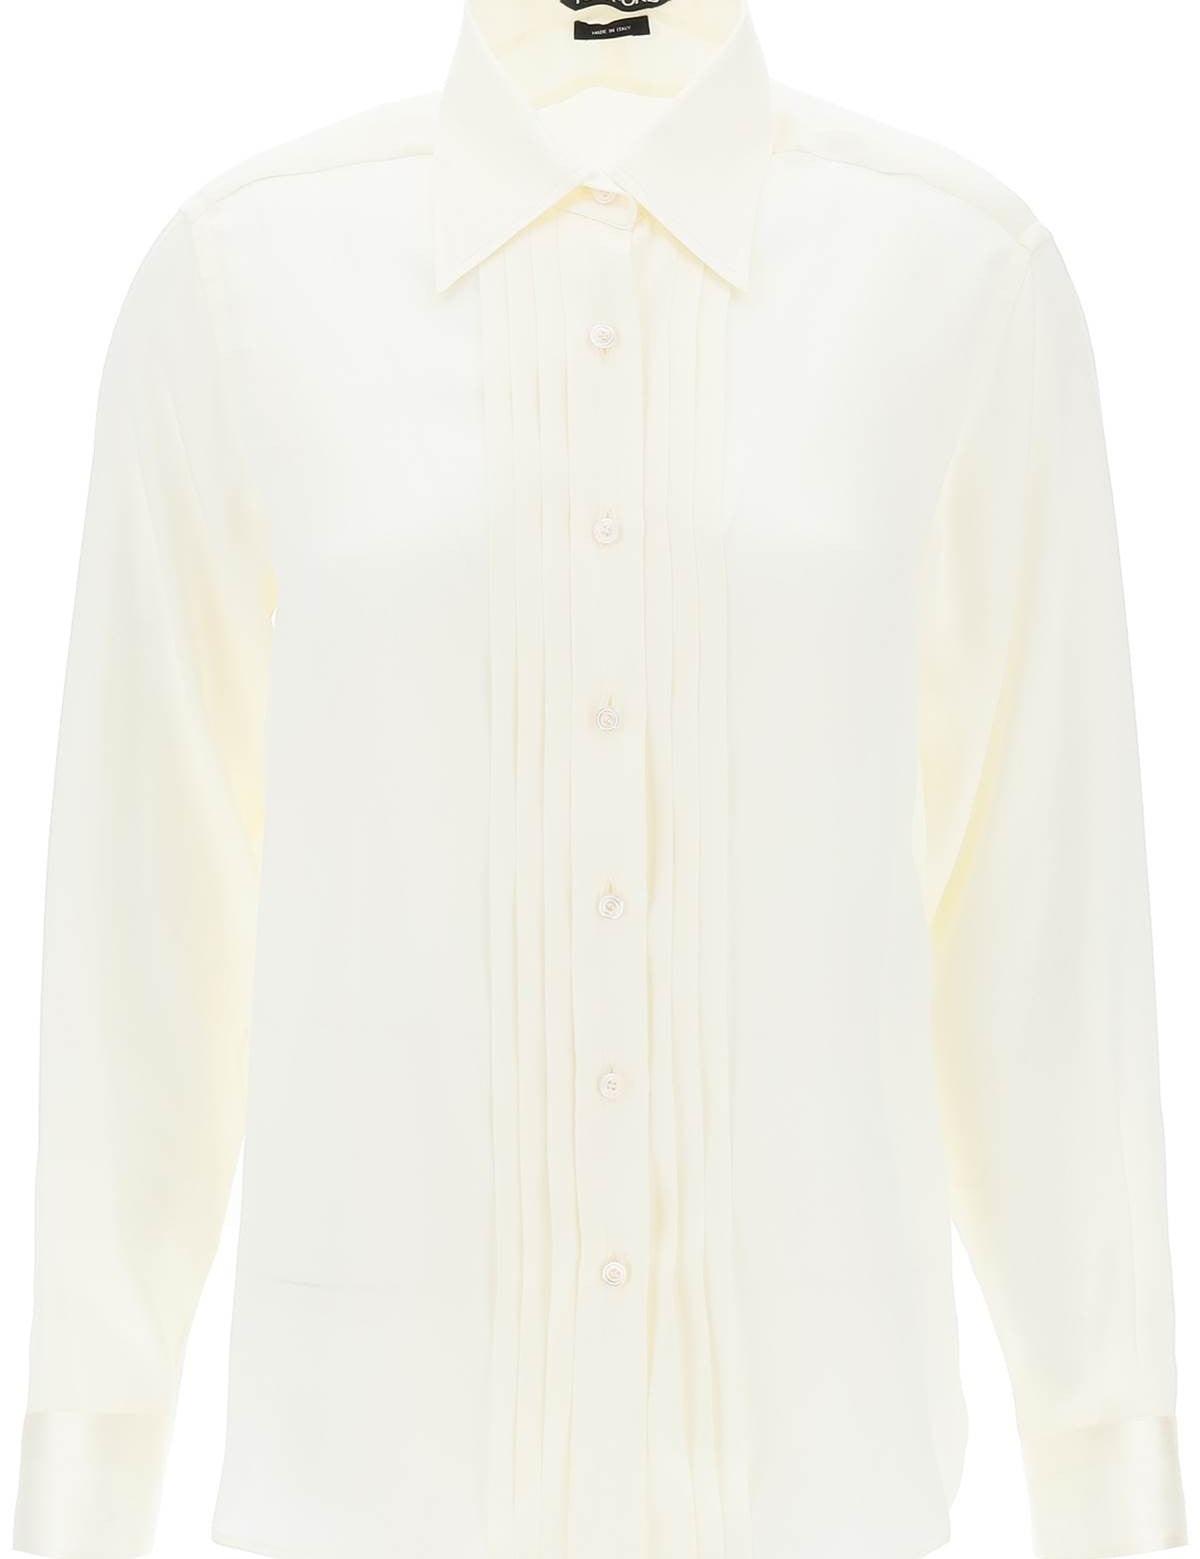 tom-ford-silk-charmeuse-blouse-shirt.jpg